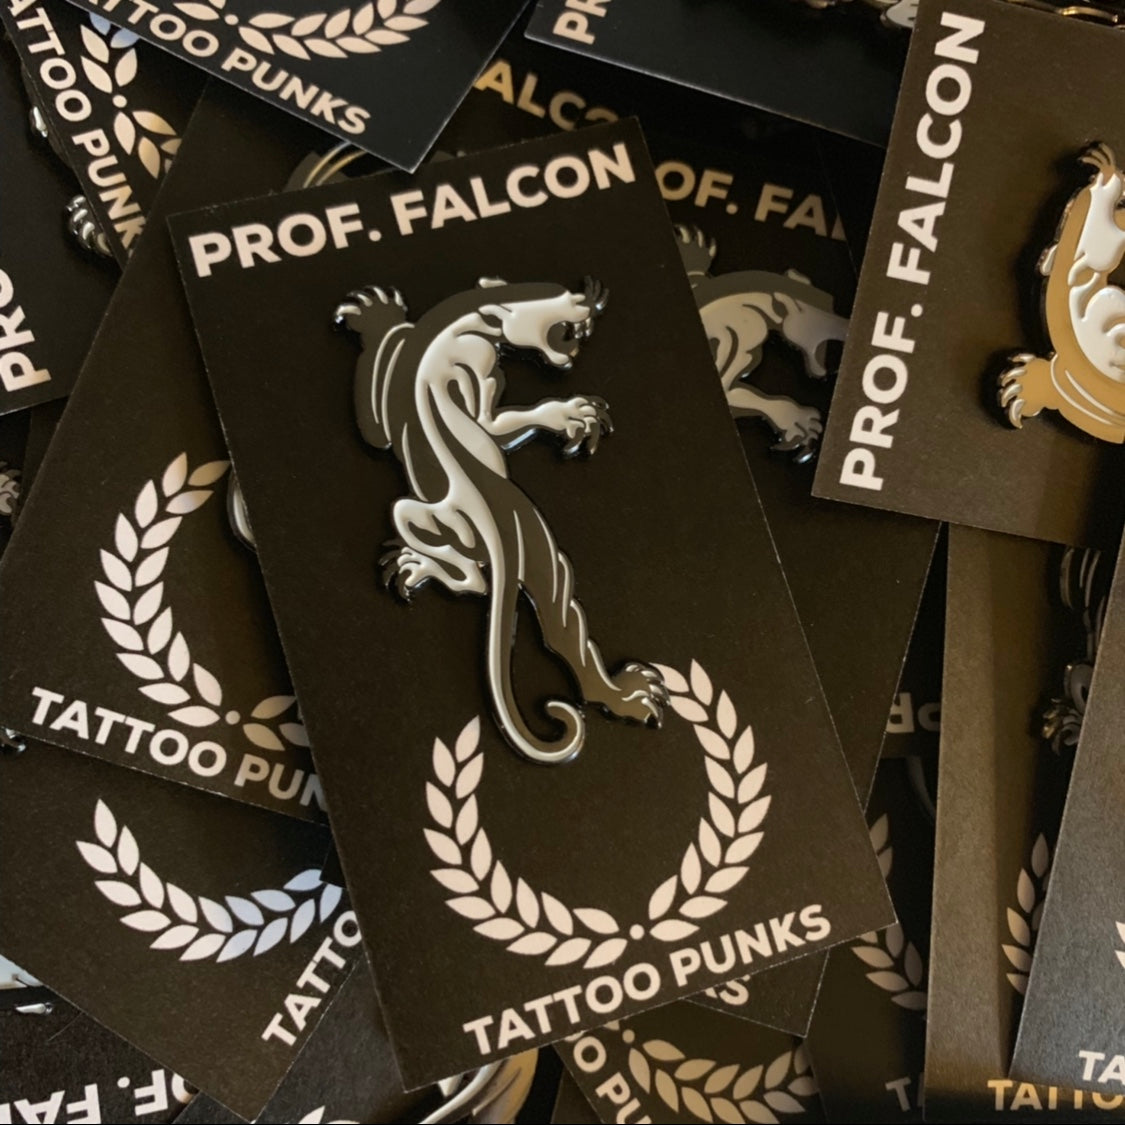 Panther Pin - Prof. Falcon